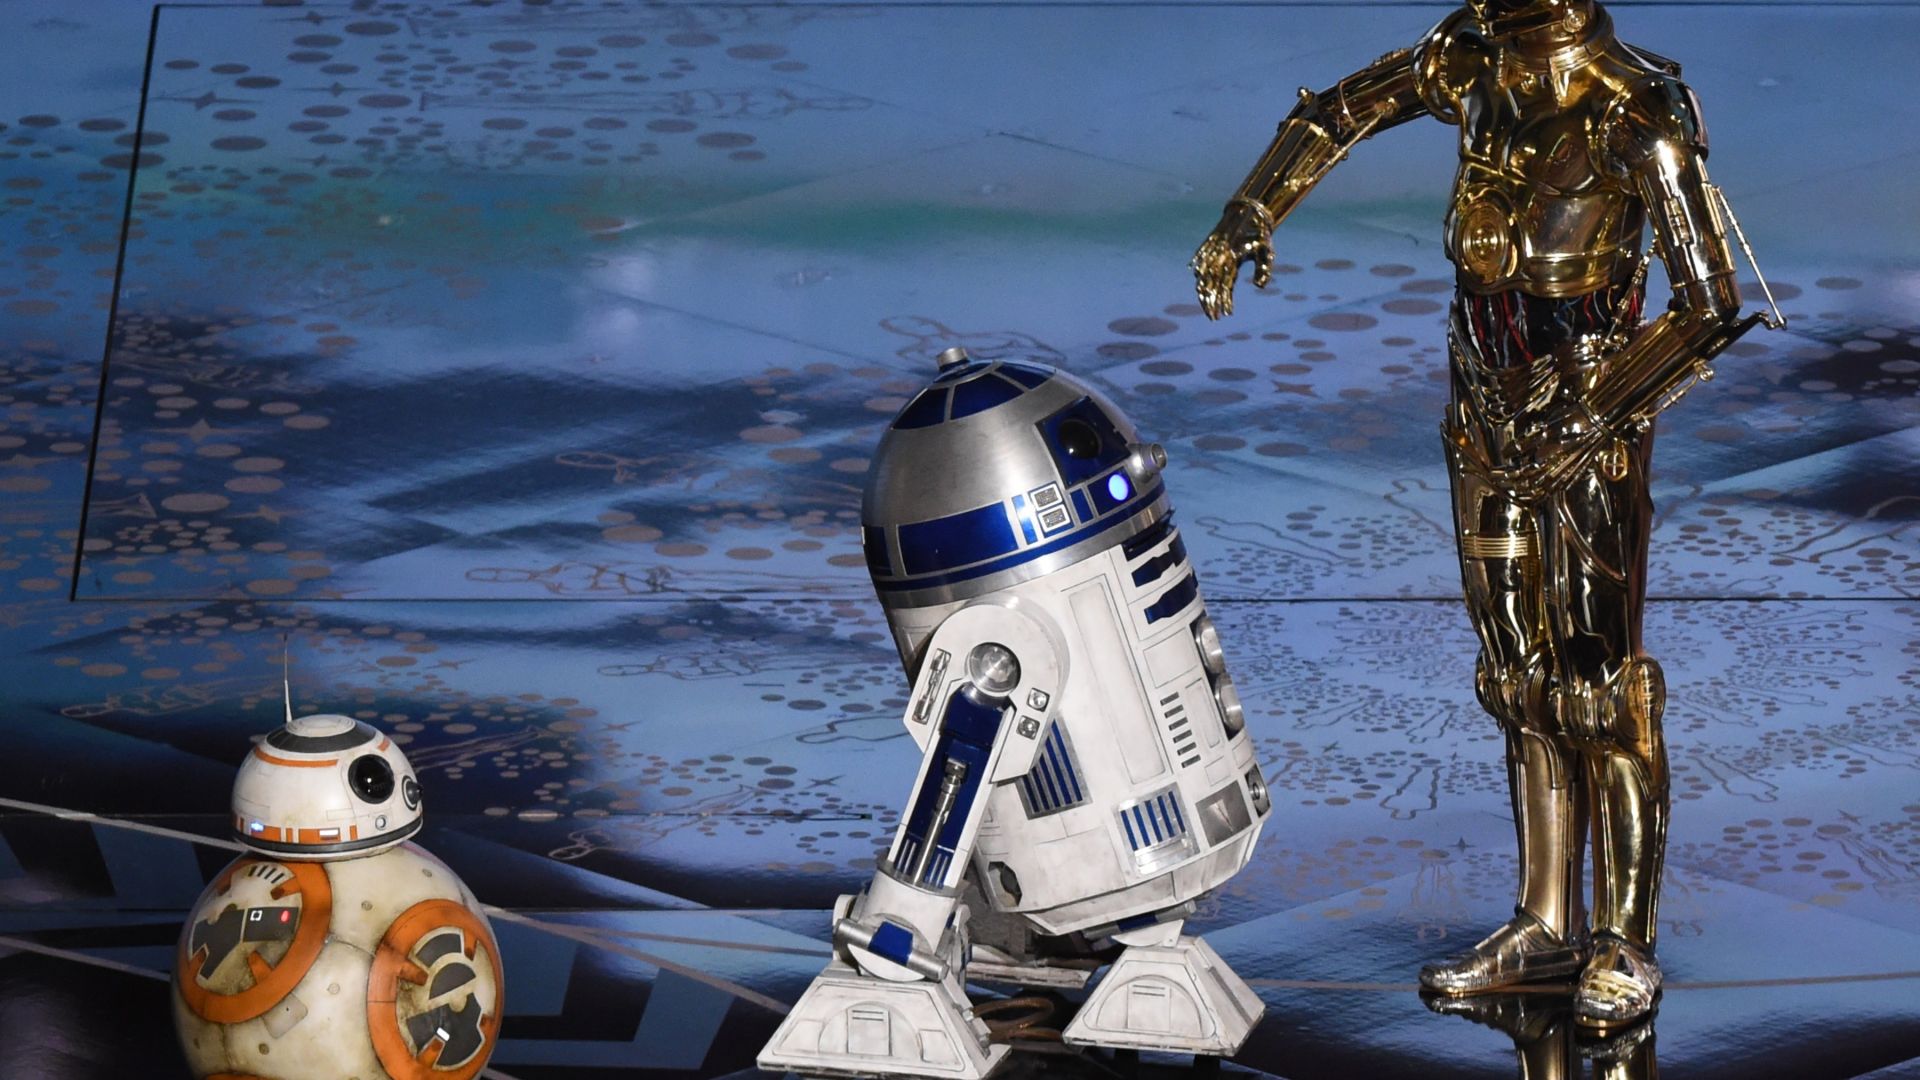 C-3PO, R2-D2, BB-8, Звездные Войны, Оскар 2016, C-3PO, R2-D2, BB-8, Oscar 2016, Star Wars, Oscar (horizontal)